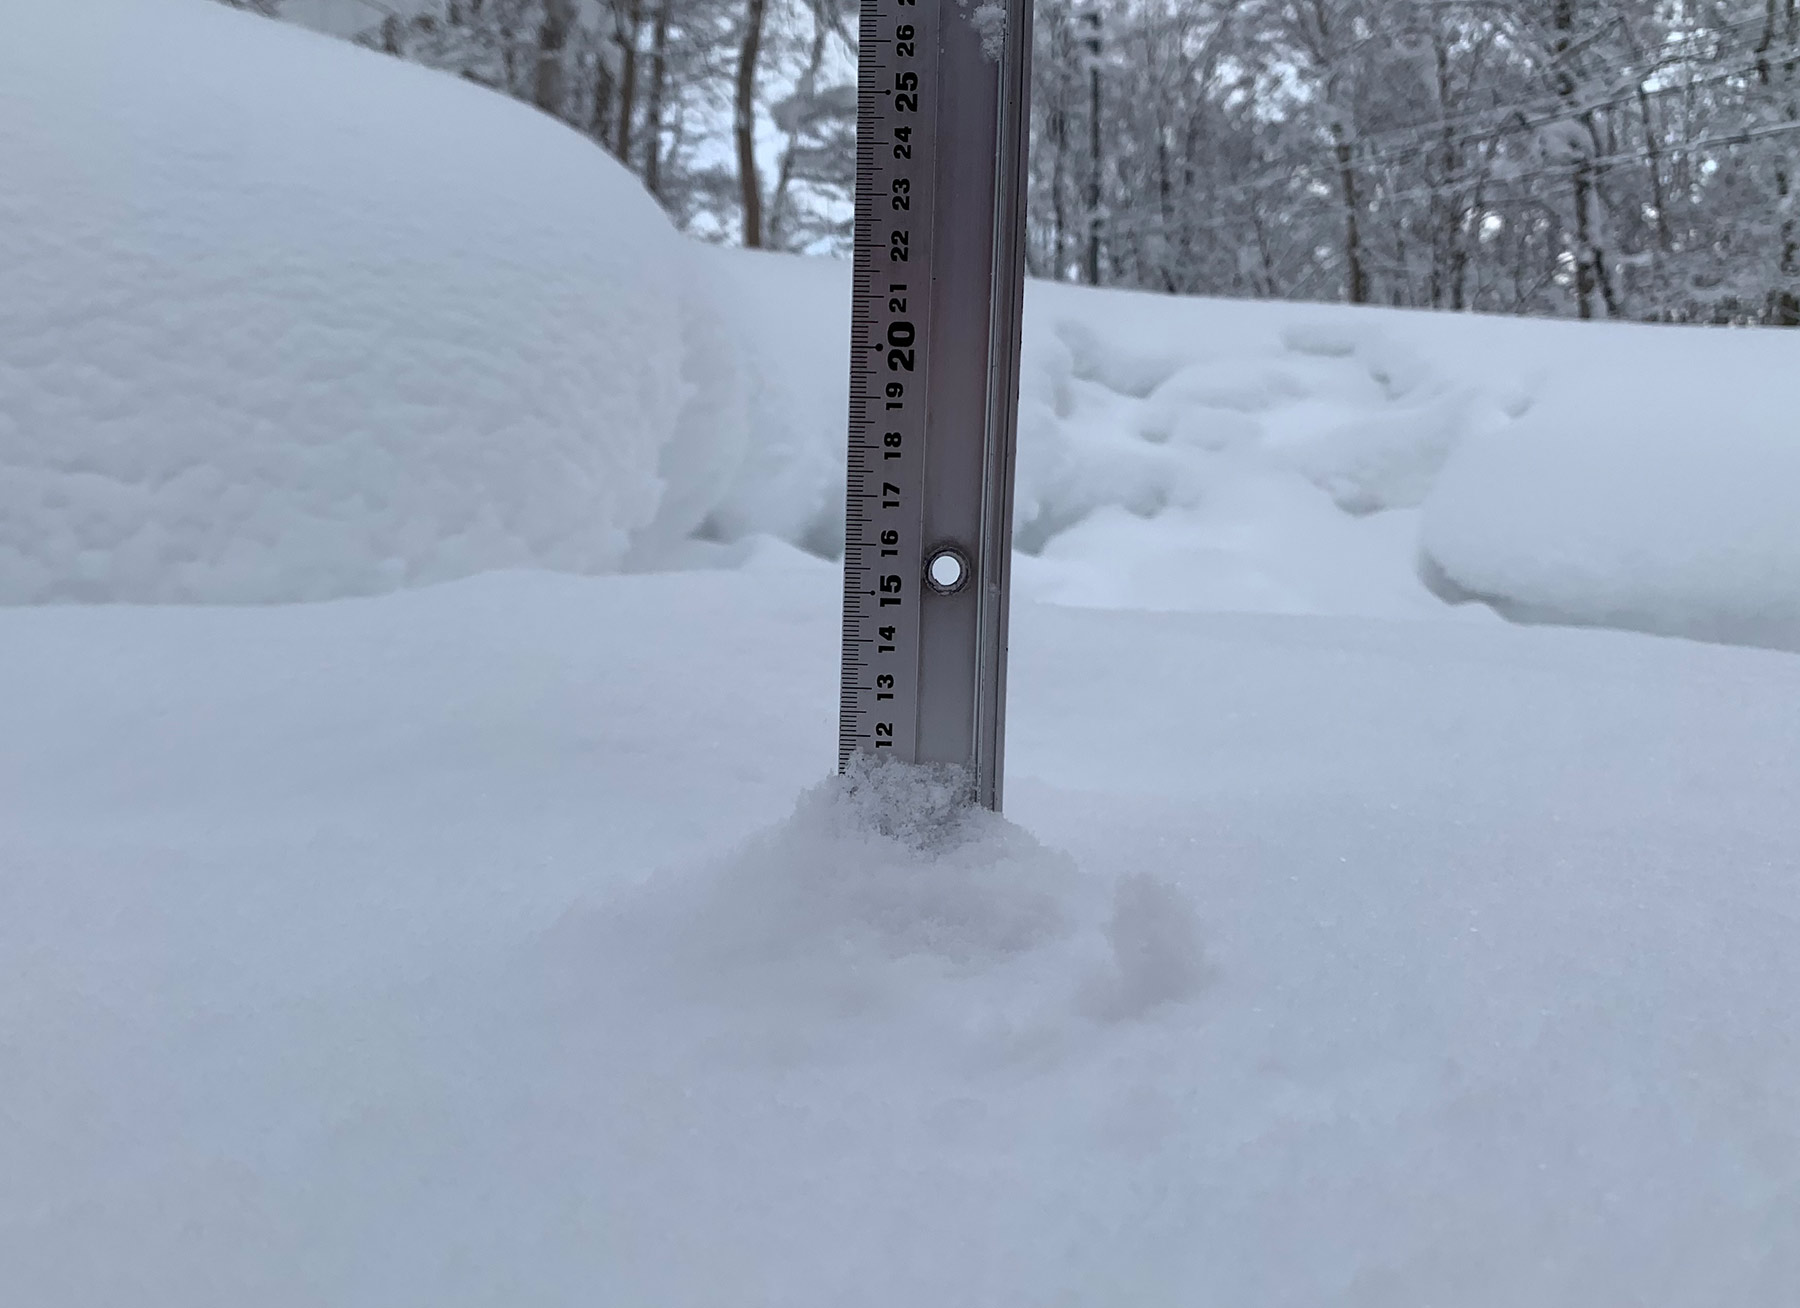 Niseko Snow Report, 6 January 2021